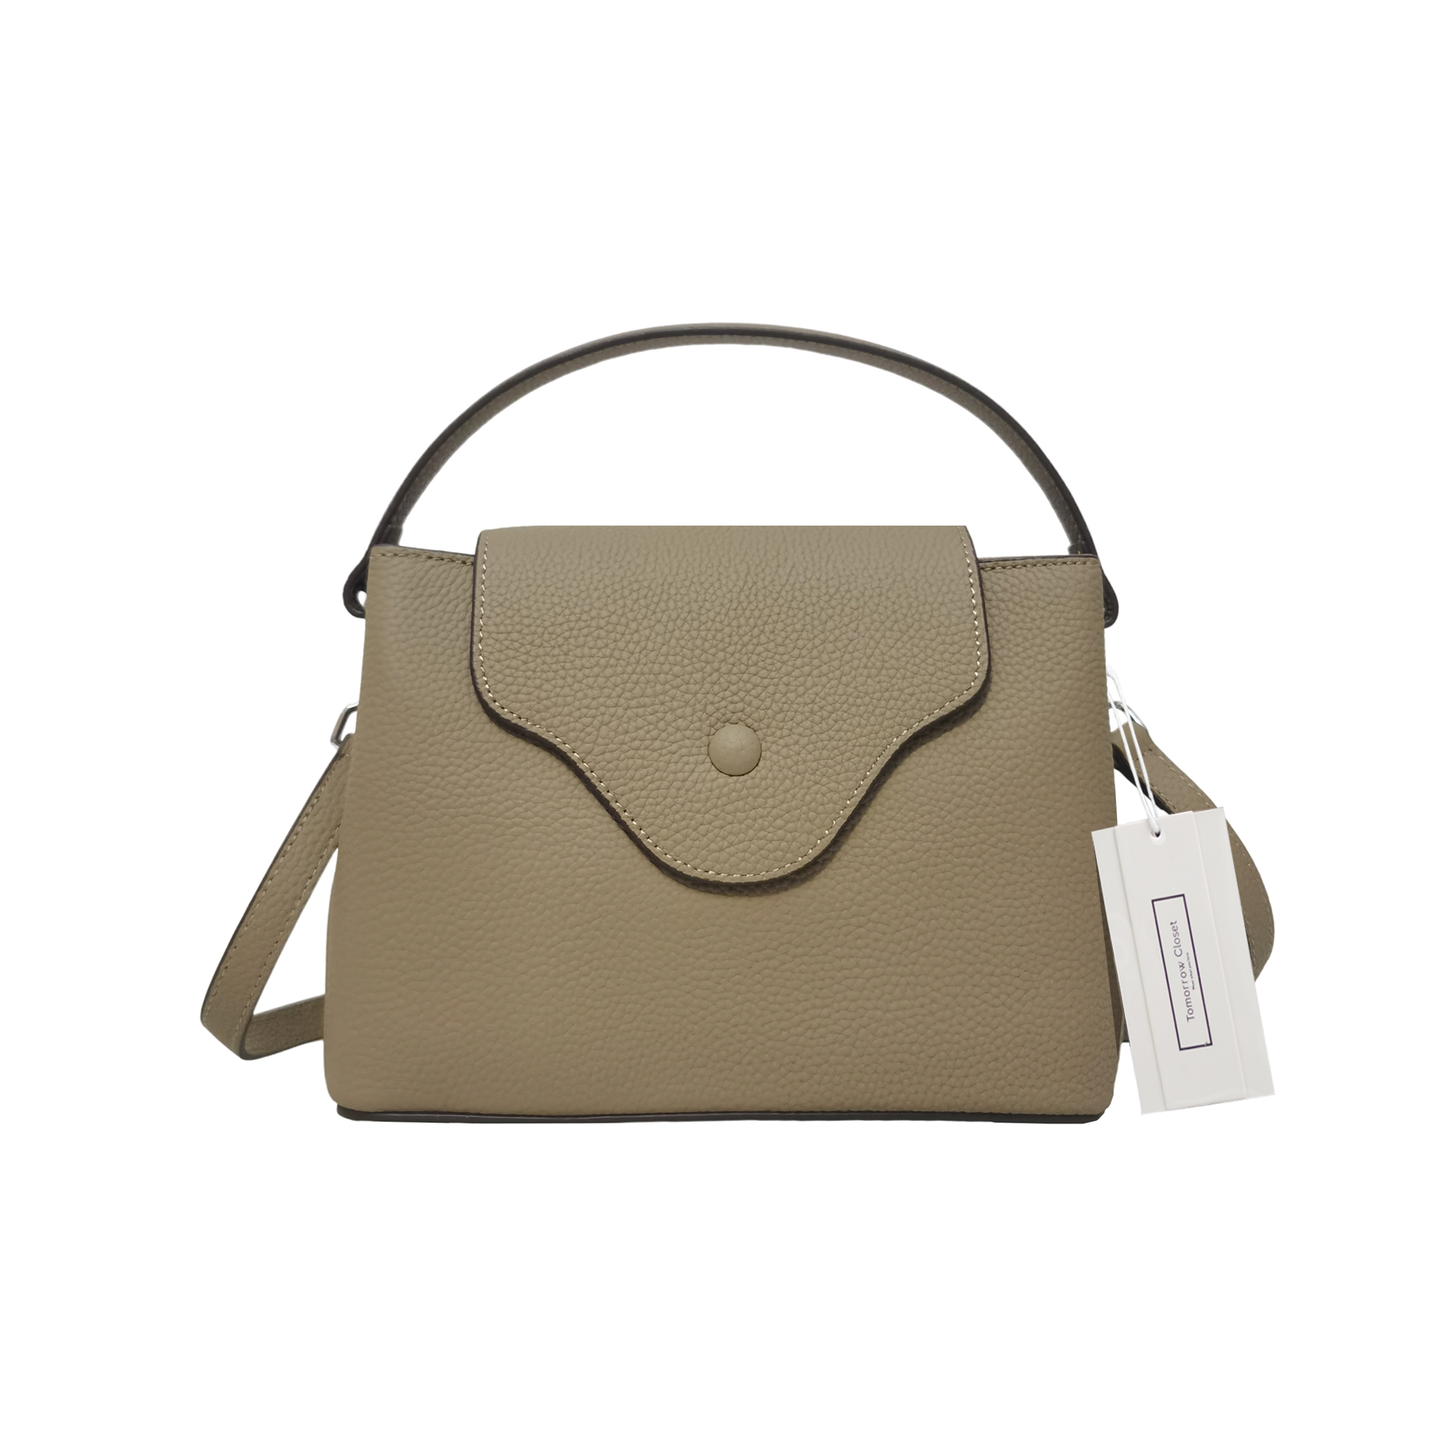 Women's genuine cowhide leather handbag Lorena design